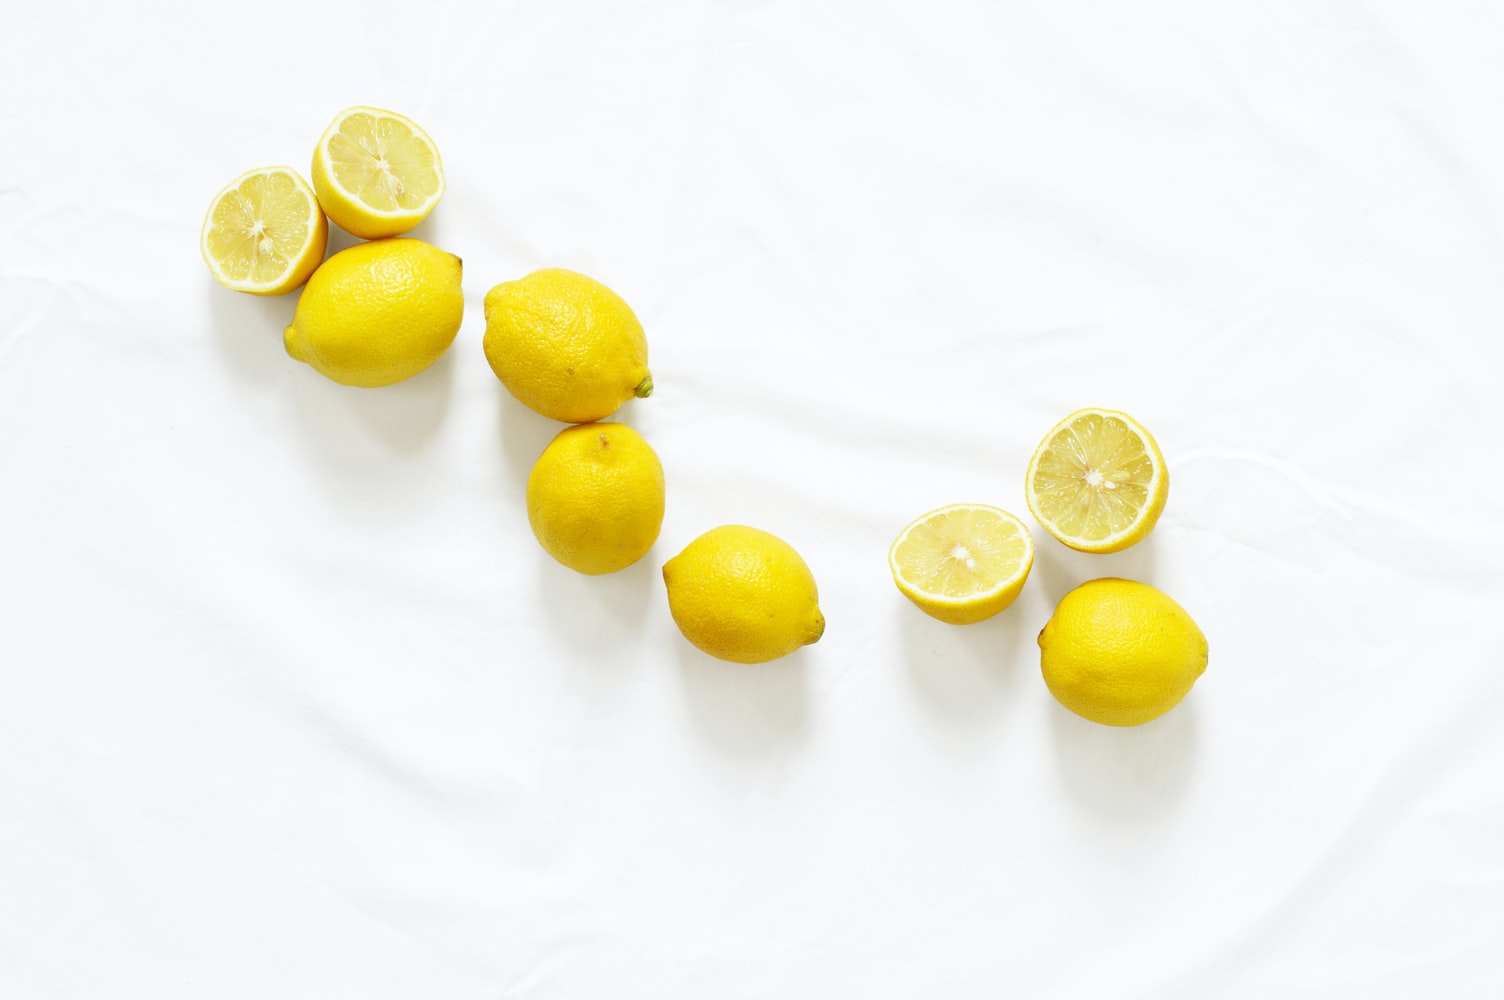 lemons spread on table